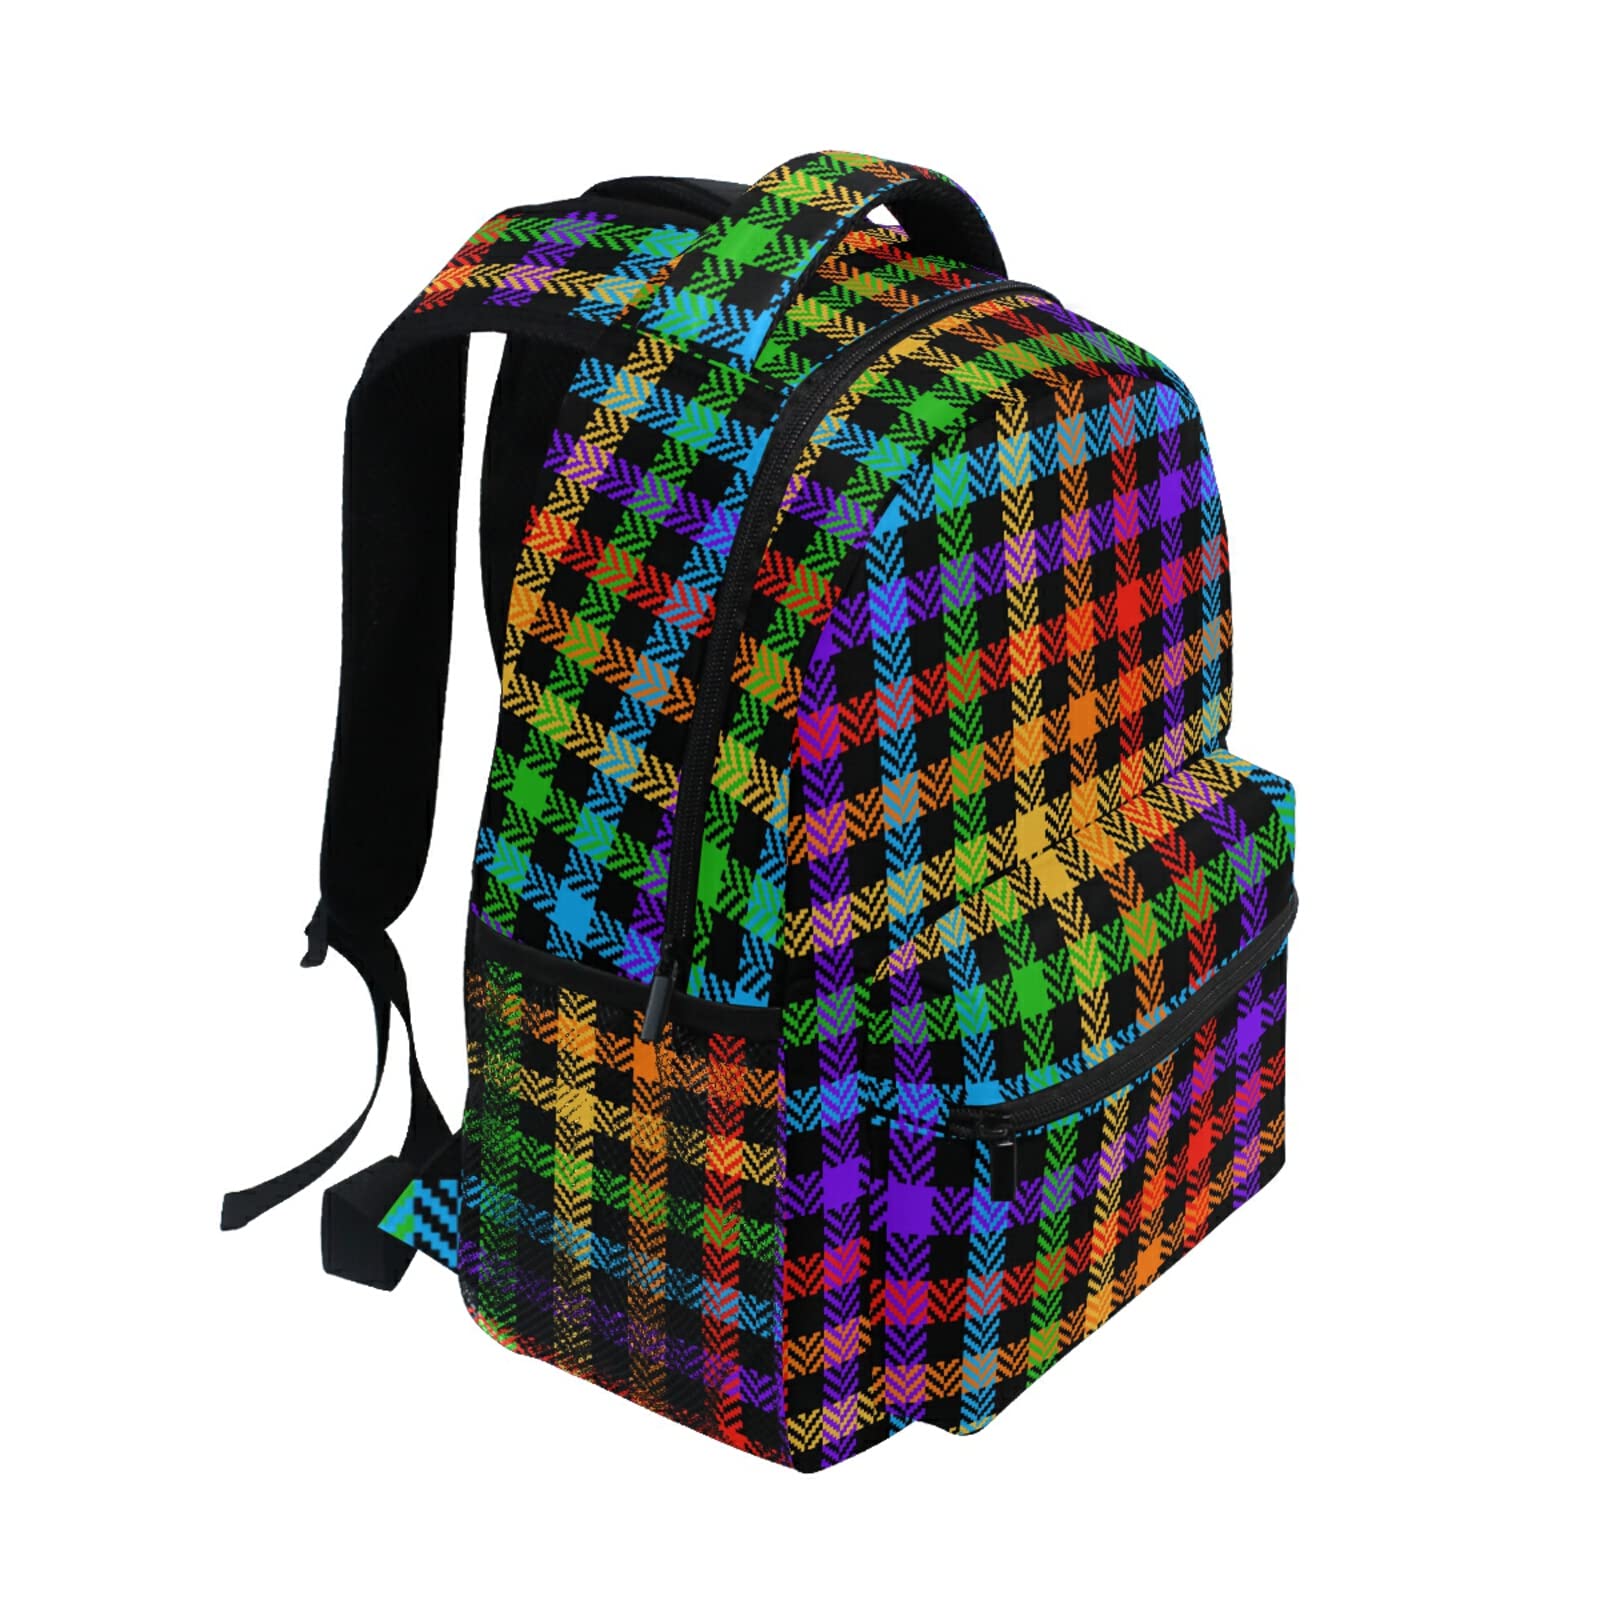 ALAZA Check Pattern Rainbow Herringbone Unisex Schoolbag Travel Laptop Bags Casual Daypack Book Bag